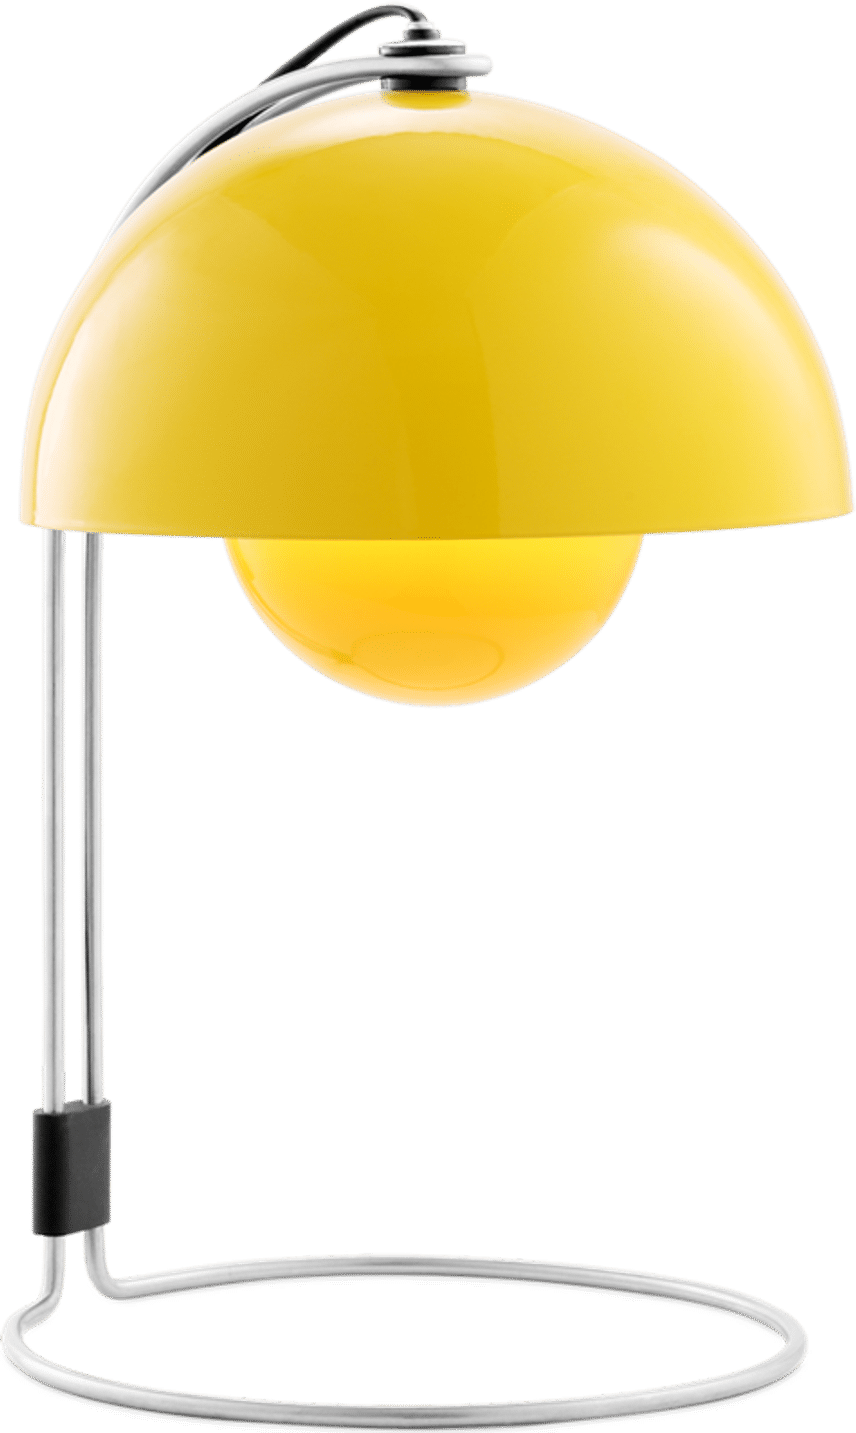 Flowerpot VP4 Style Table Lamp Yellow image.